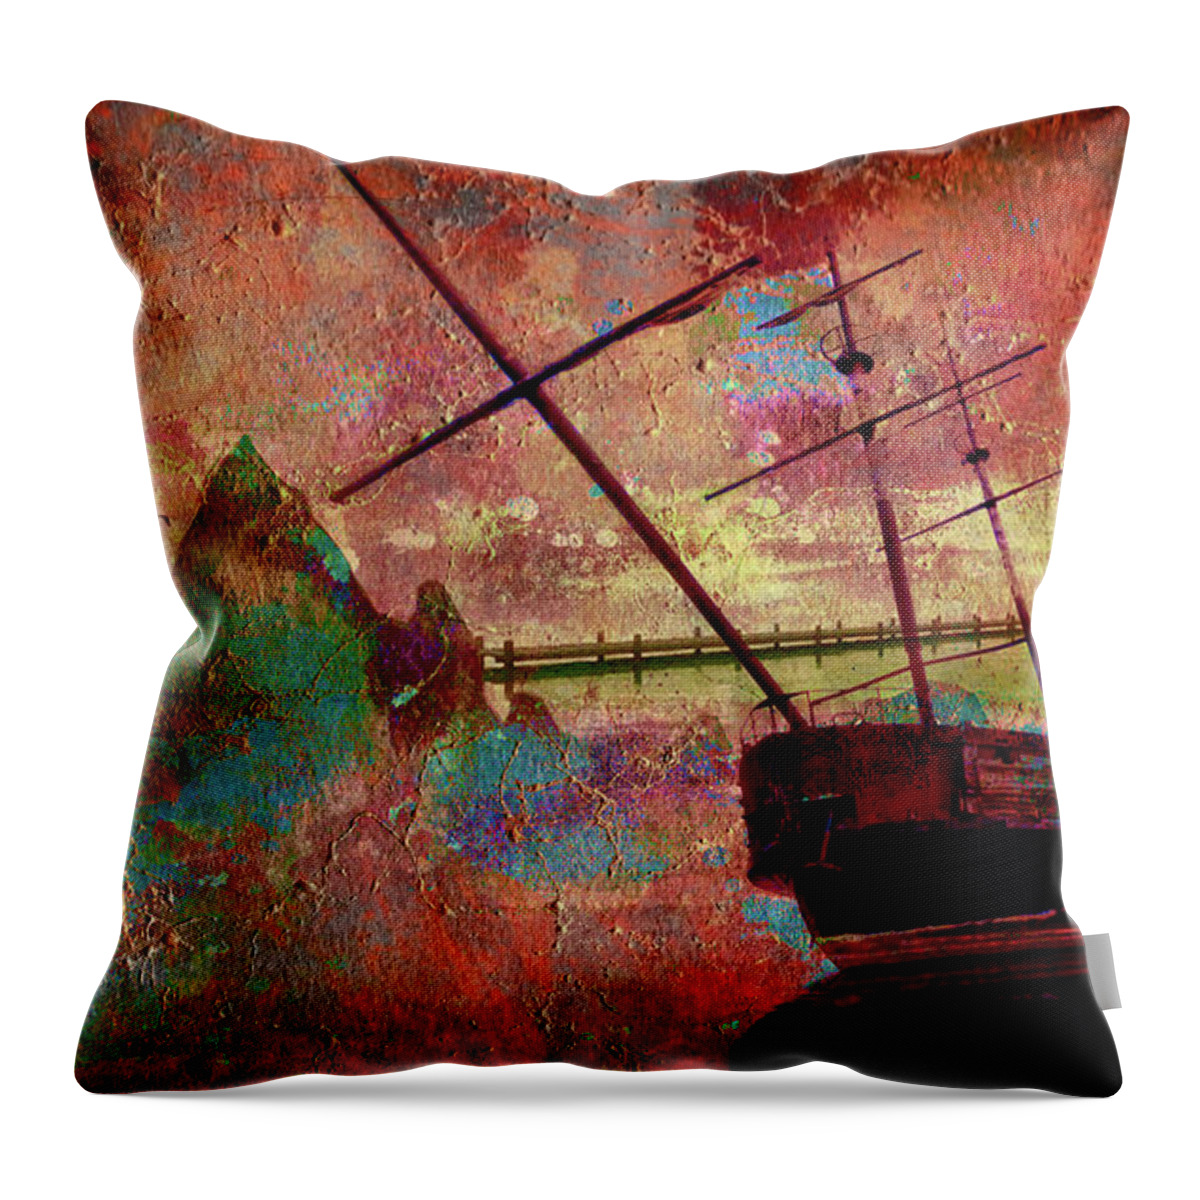 Island Throw Pillow featuring the digital art Lost Island by Greg Sharpe